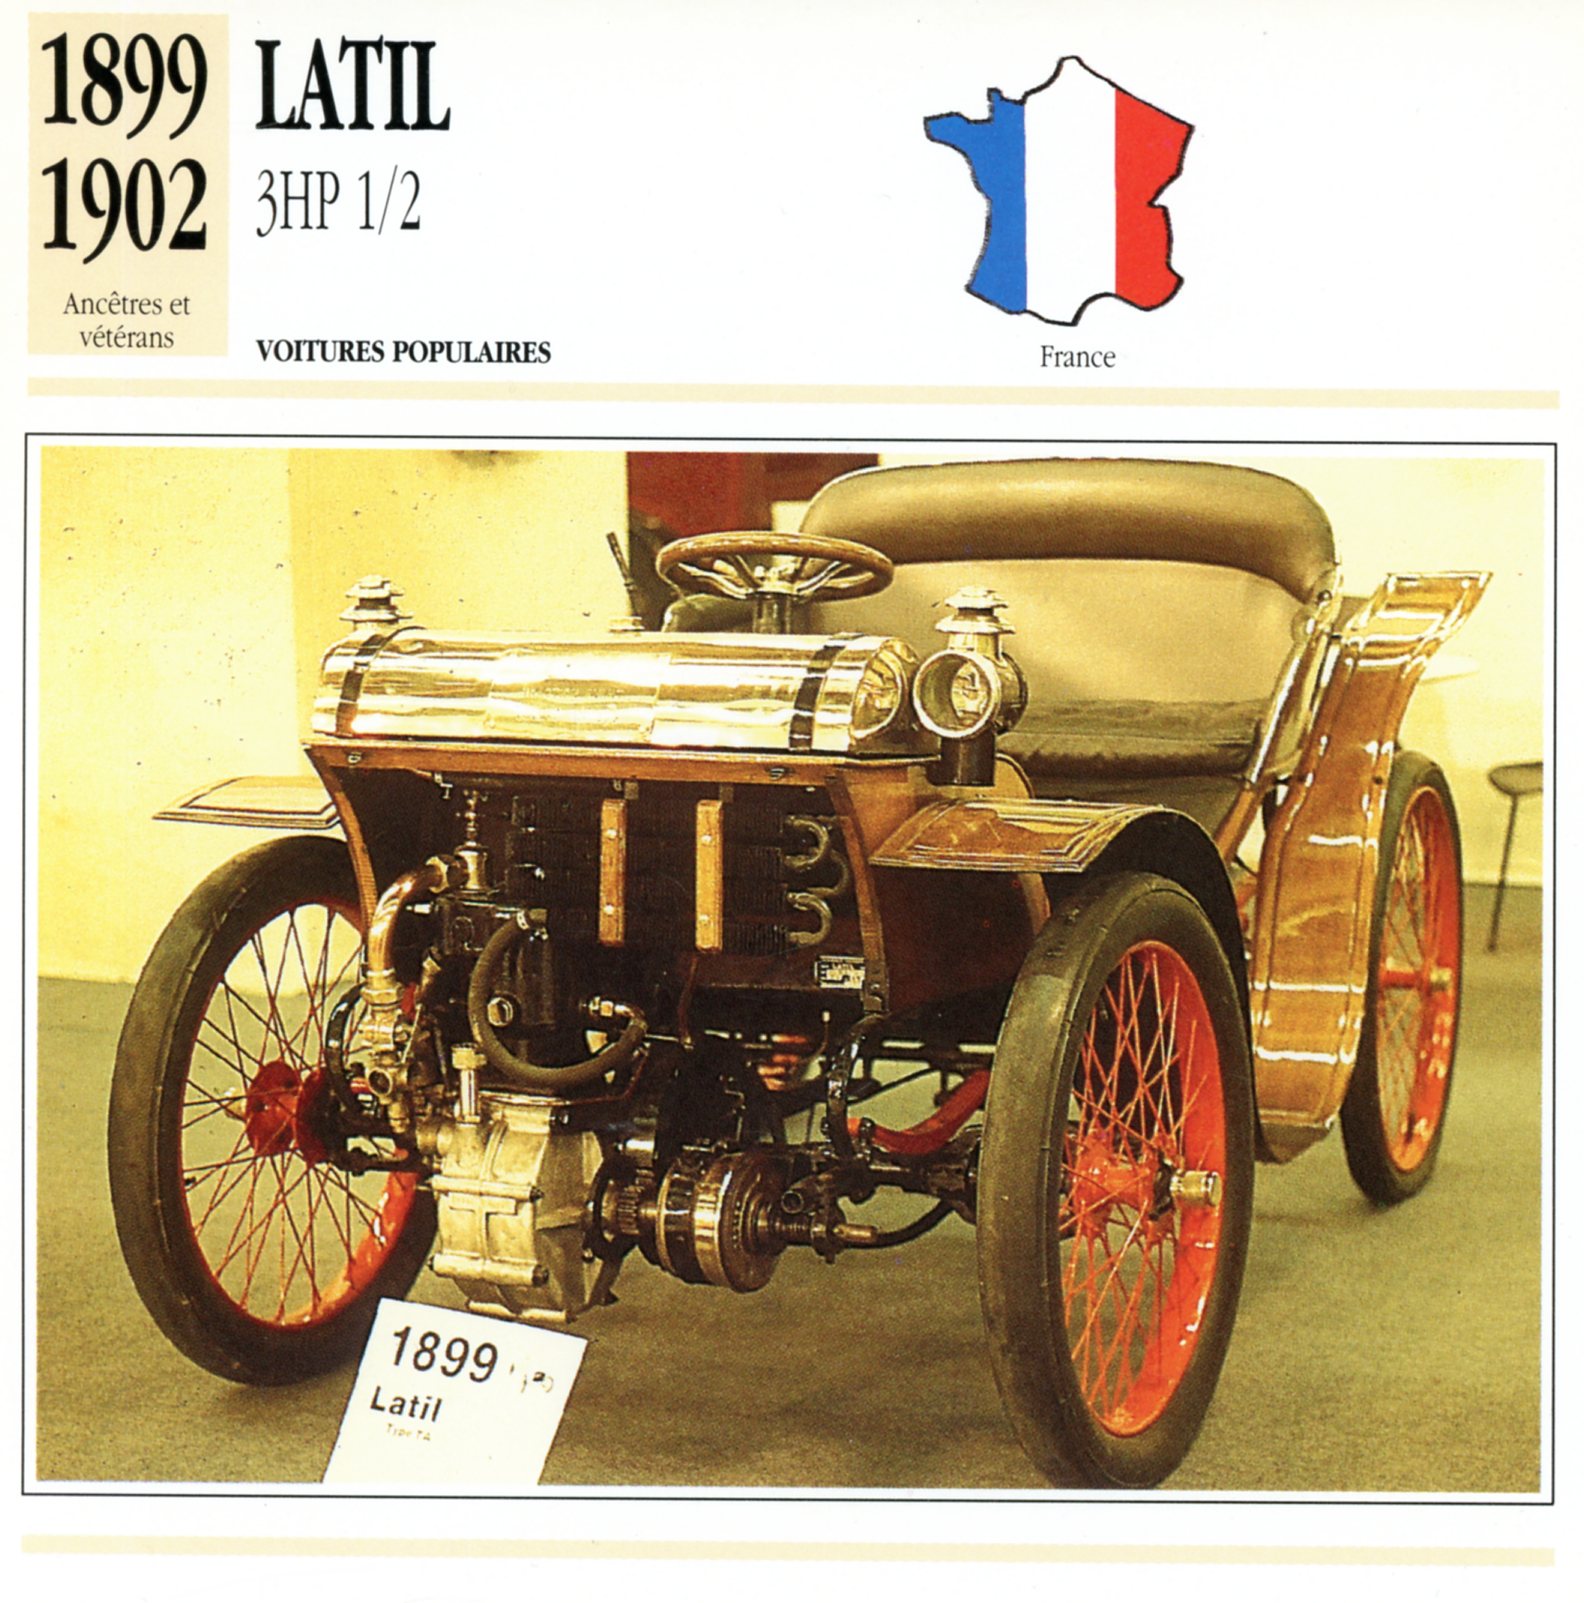 FICHE-LATIL-3HP-LEMASTERBROCKERS-CARS-CARD-FICHE-AUTO-1899-1902